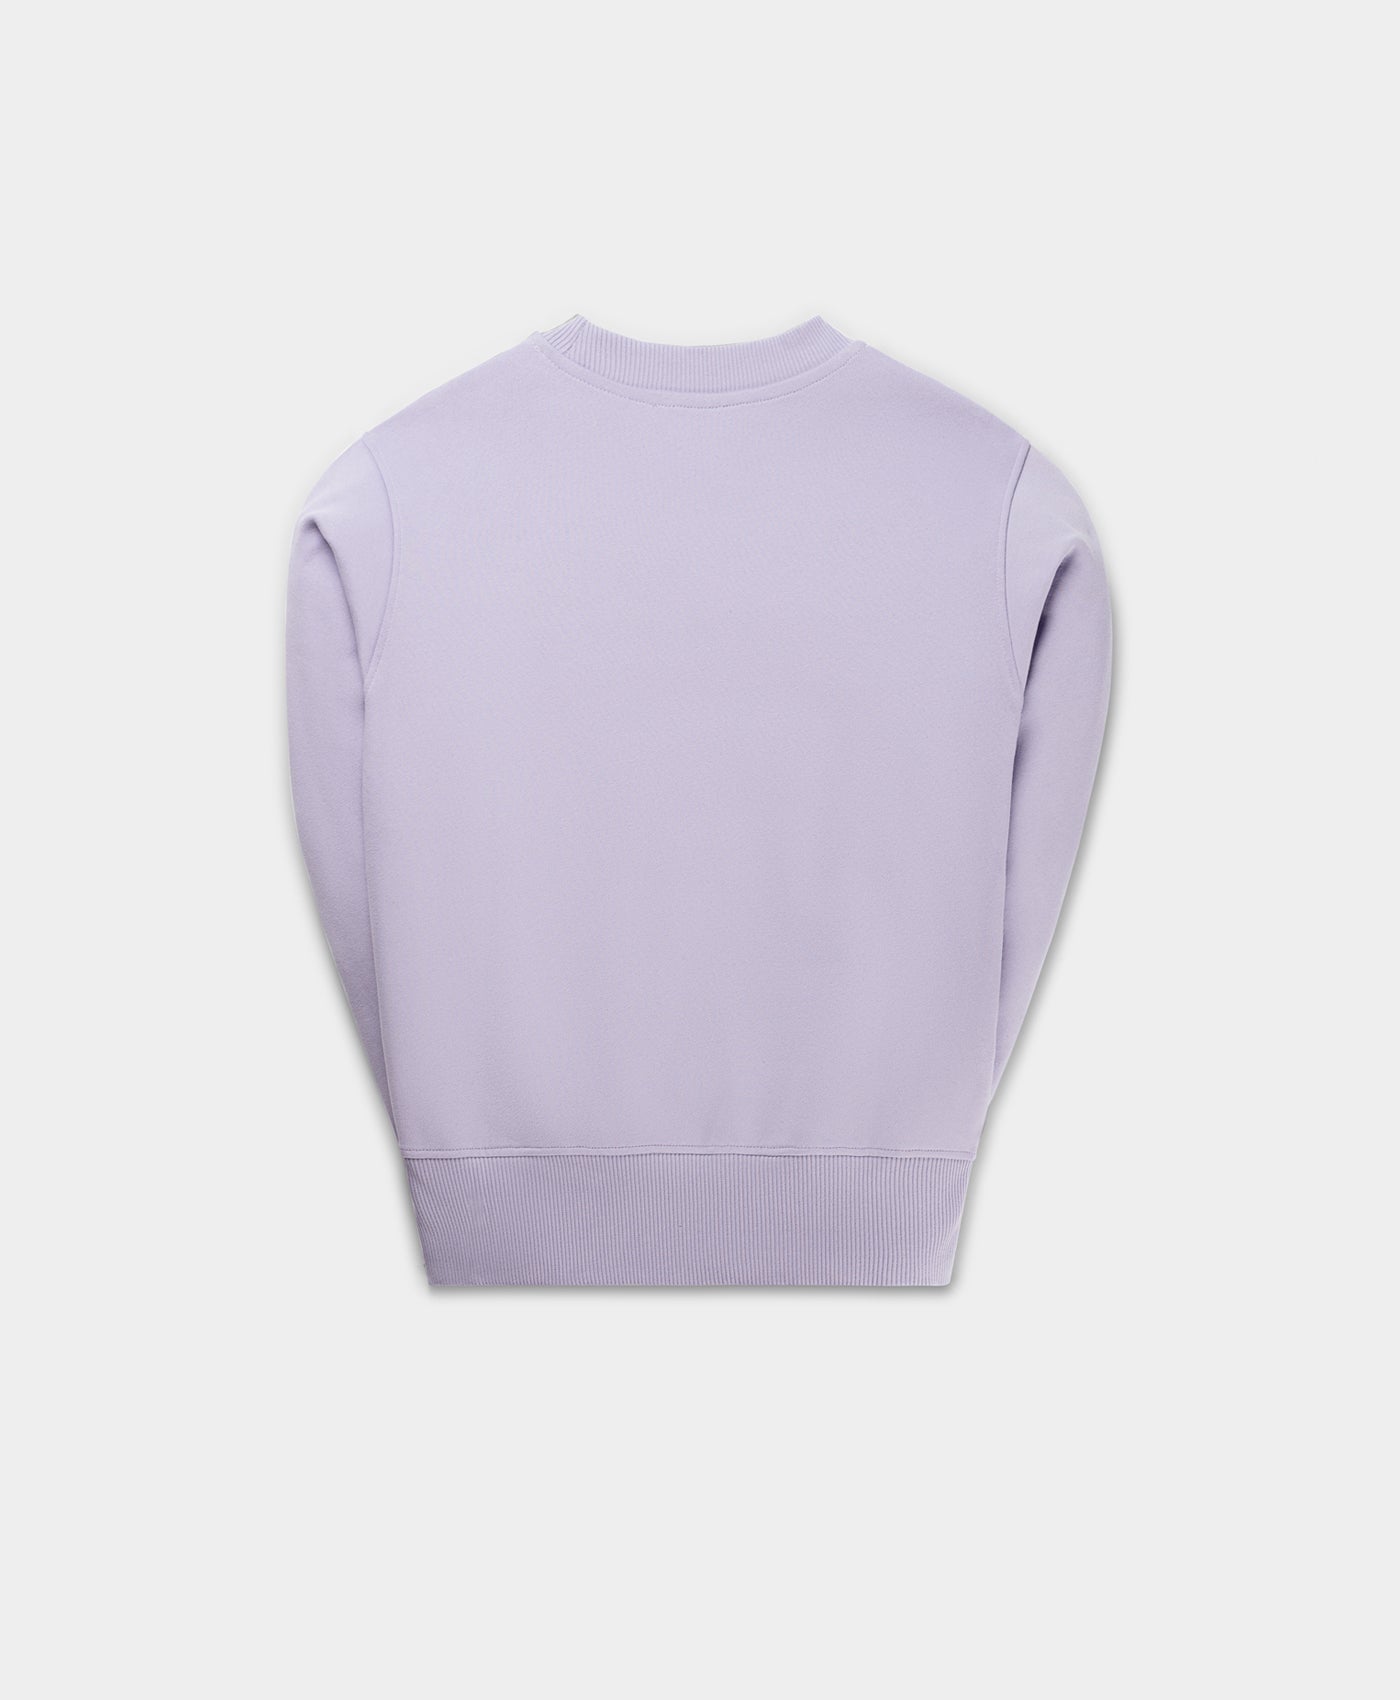 DP - Purple Rose Evvie Circle Sweater - Packshot - Rear